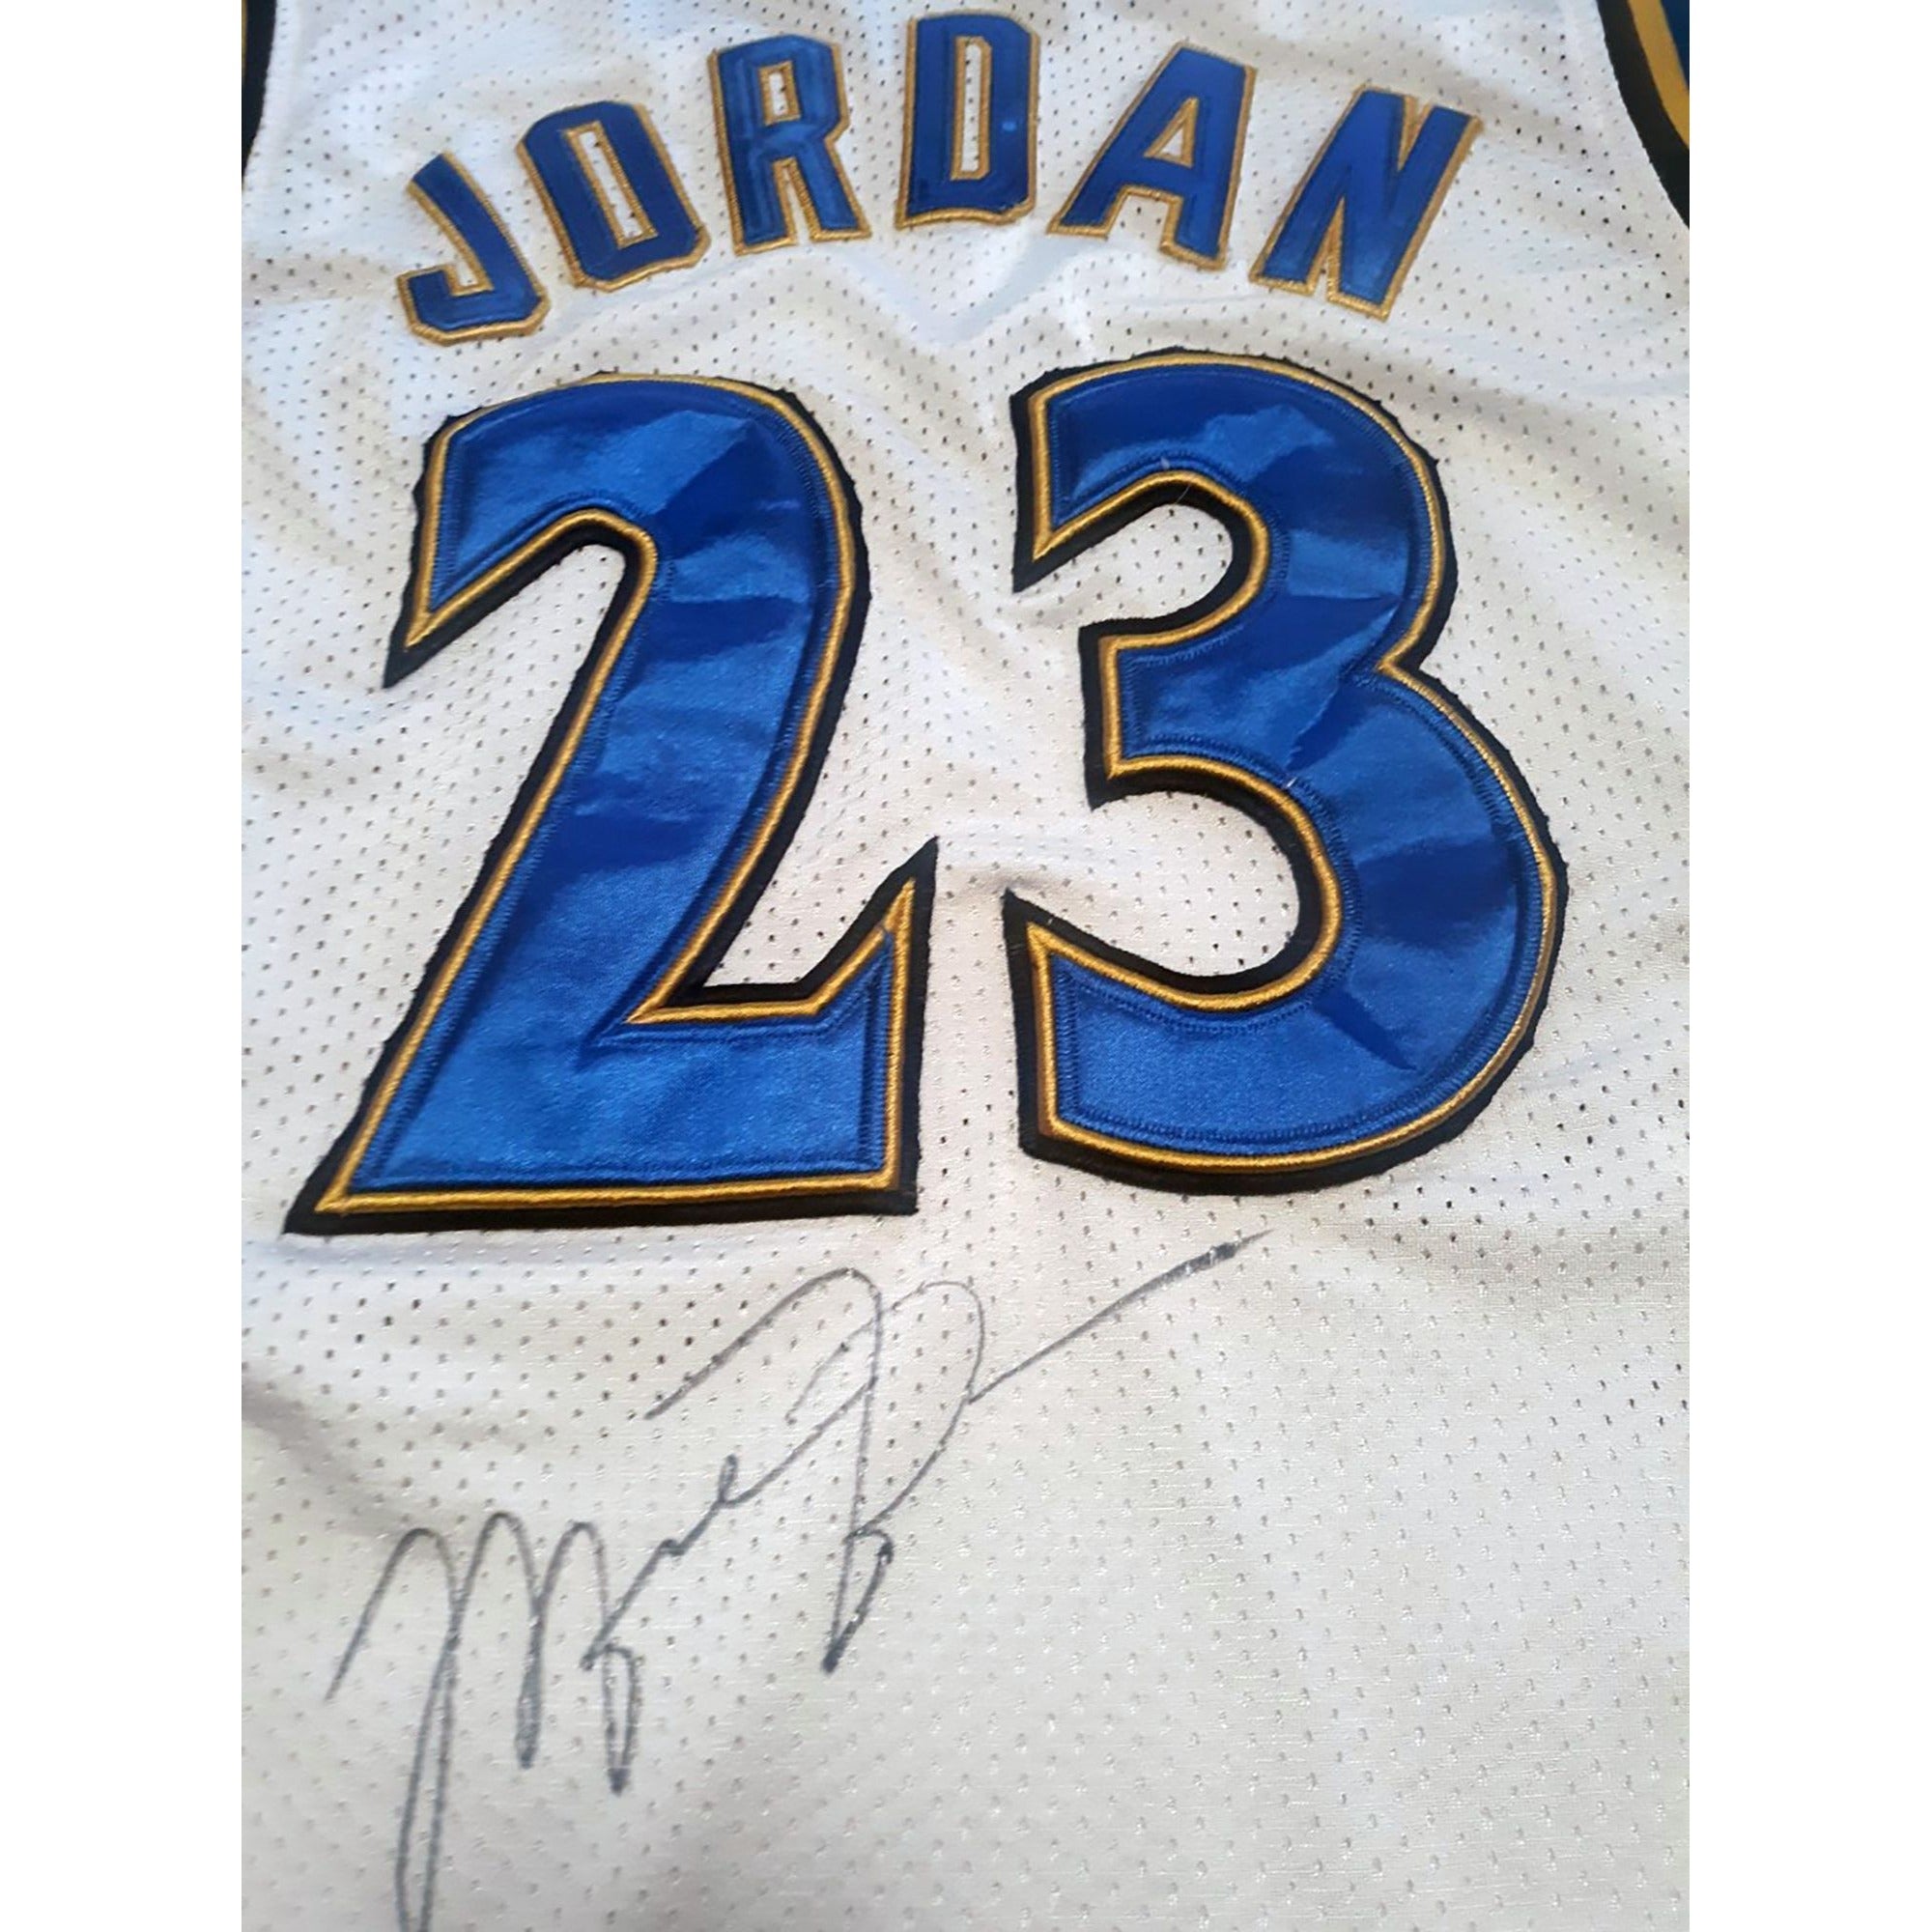 Autographed Washington Wizards Michael Jordan Upper Deck Jersey